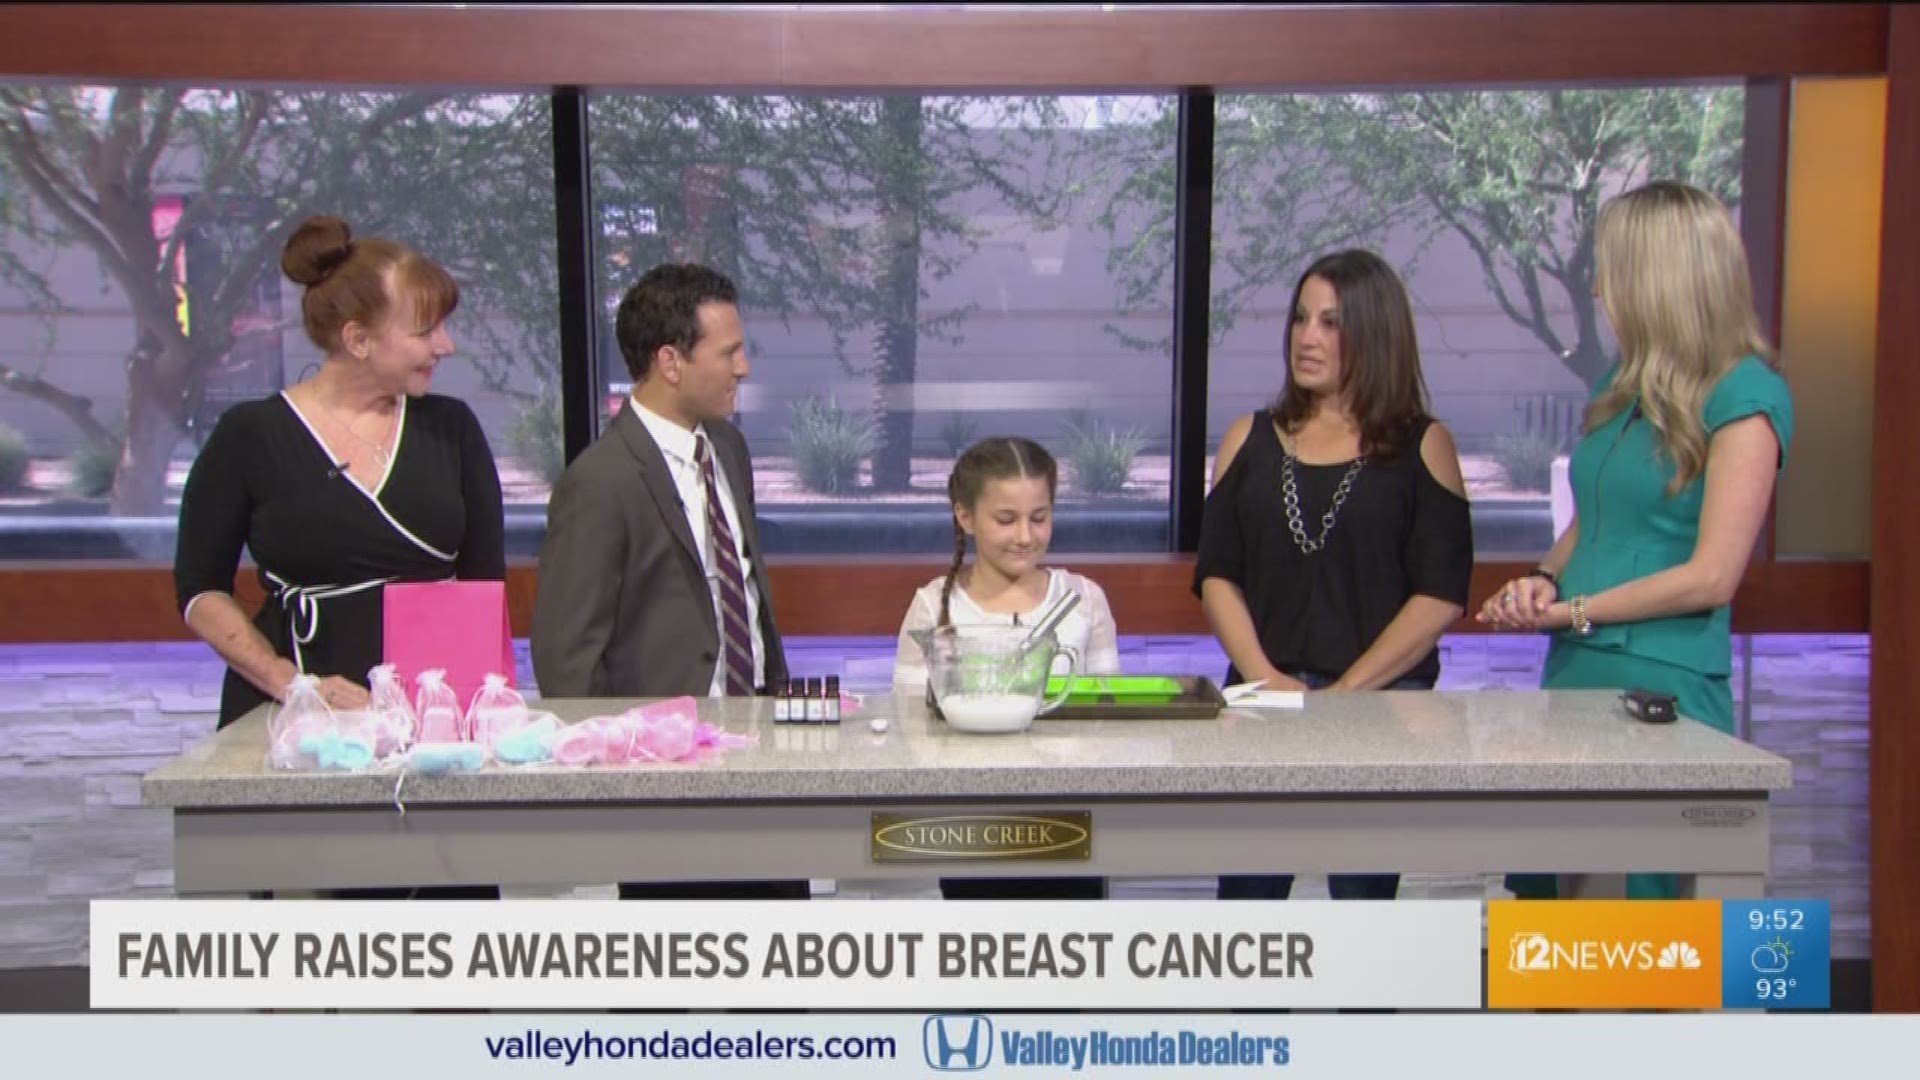 Brianna raises money to donate to breast cancer awareness non-profit. 